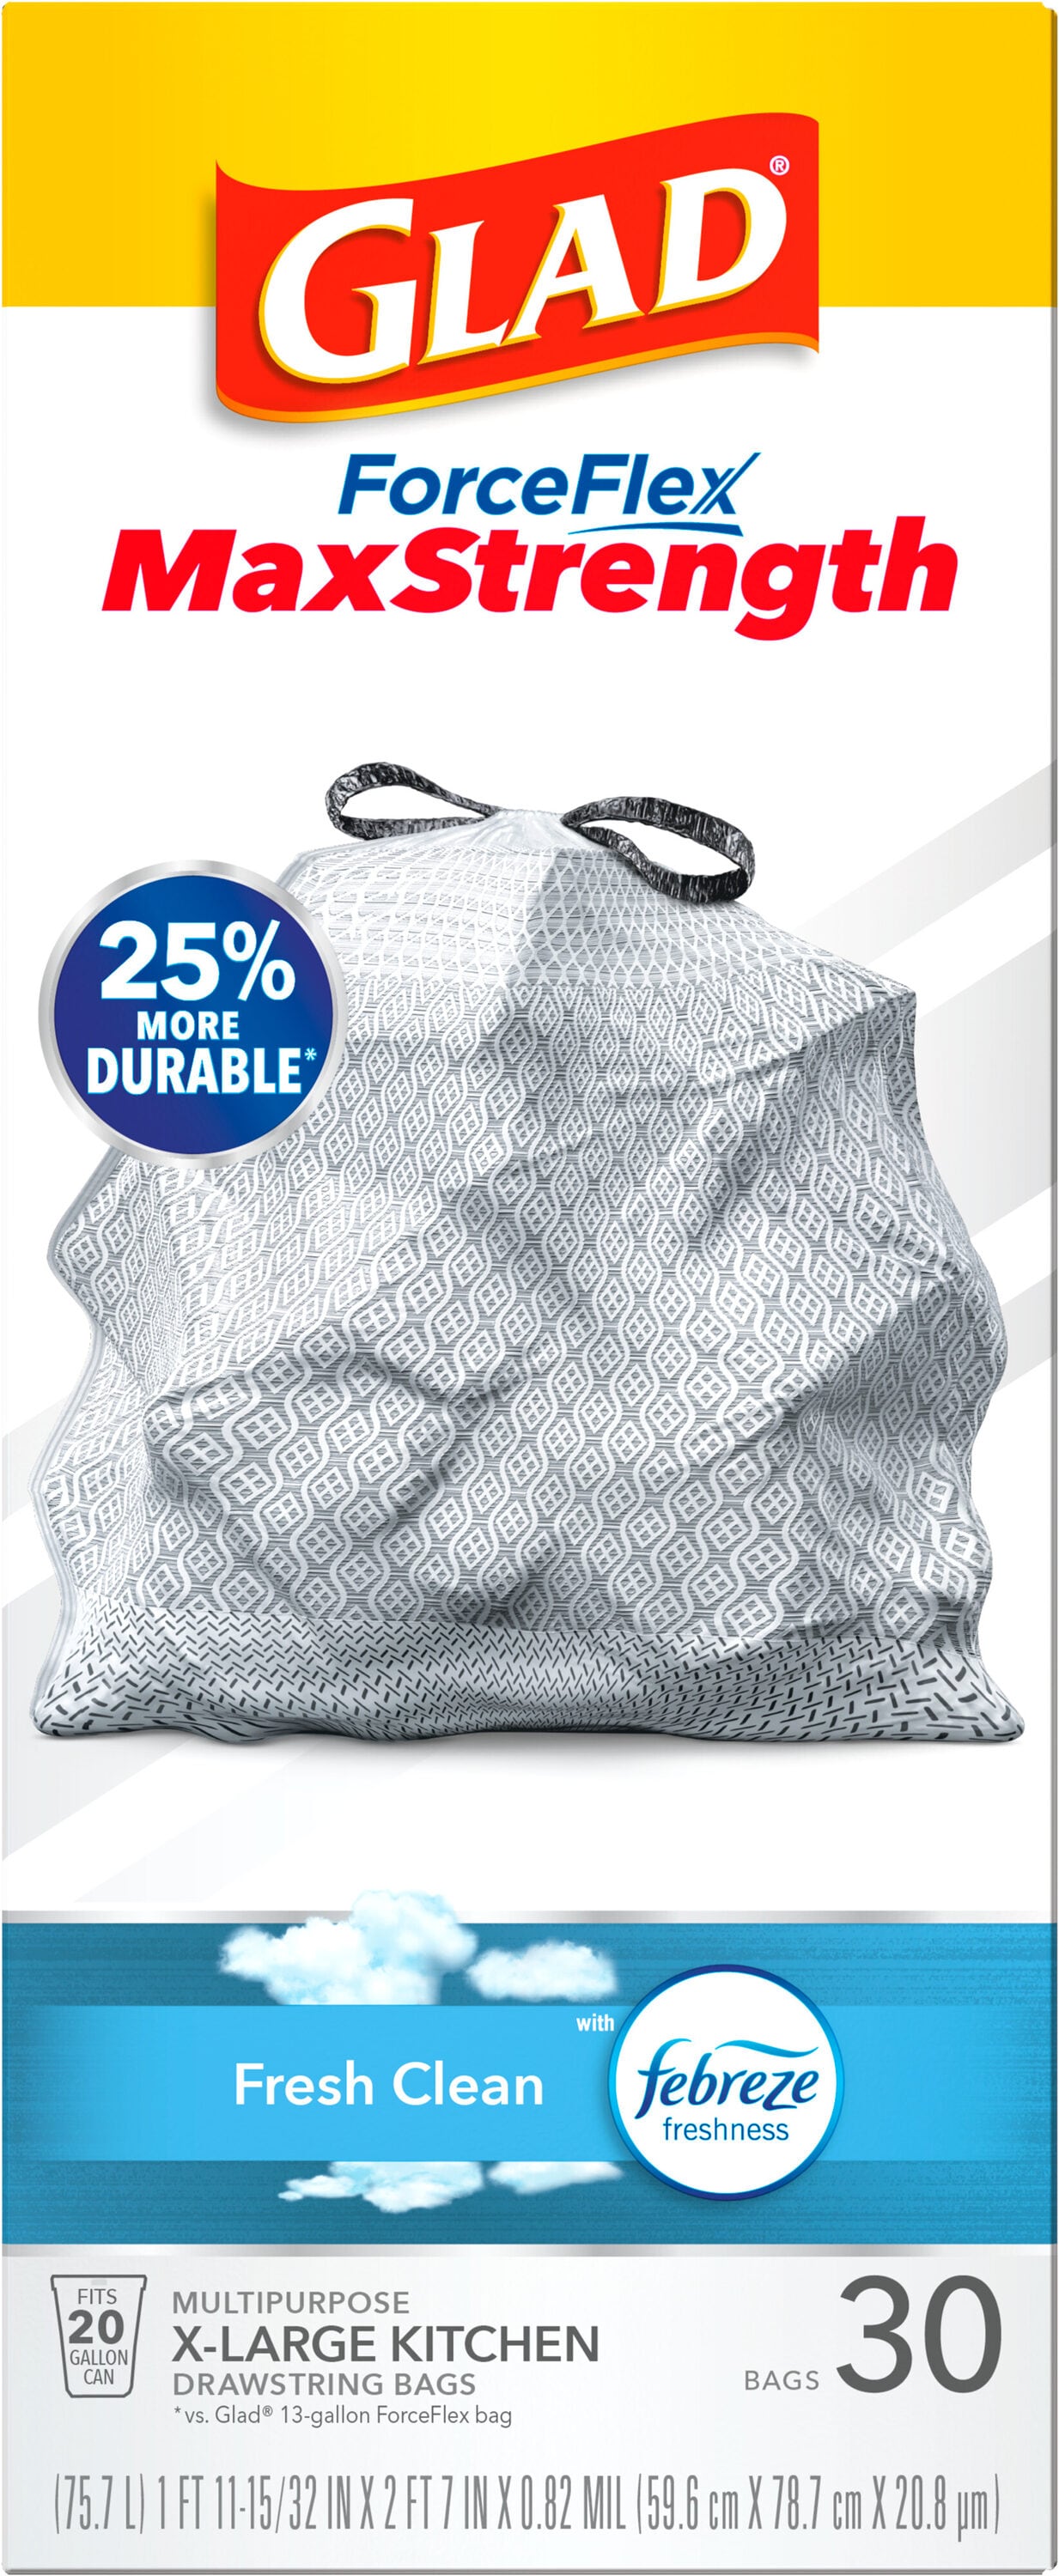 Glad Medium Quick Tie Trash Bags OdorShield 8 Gallon White Trash Bag  Febreze Fresh Clean 26 Count - Office Depot